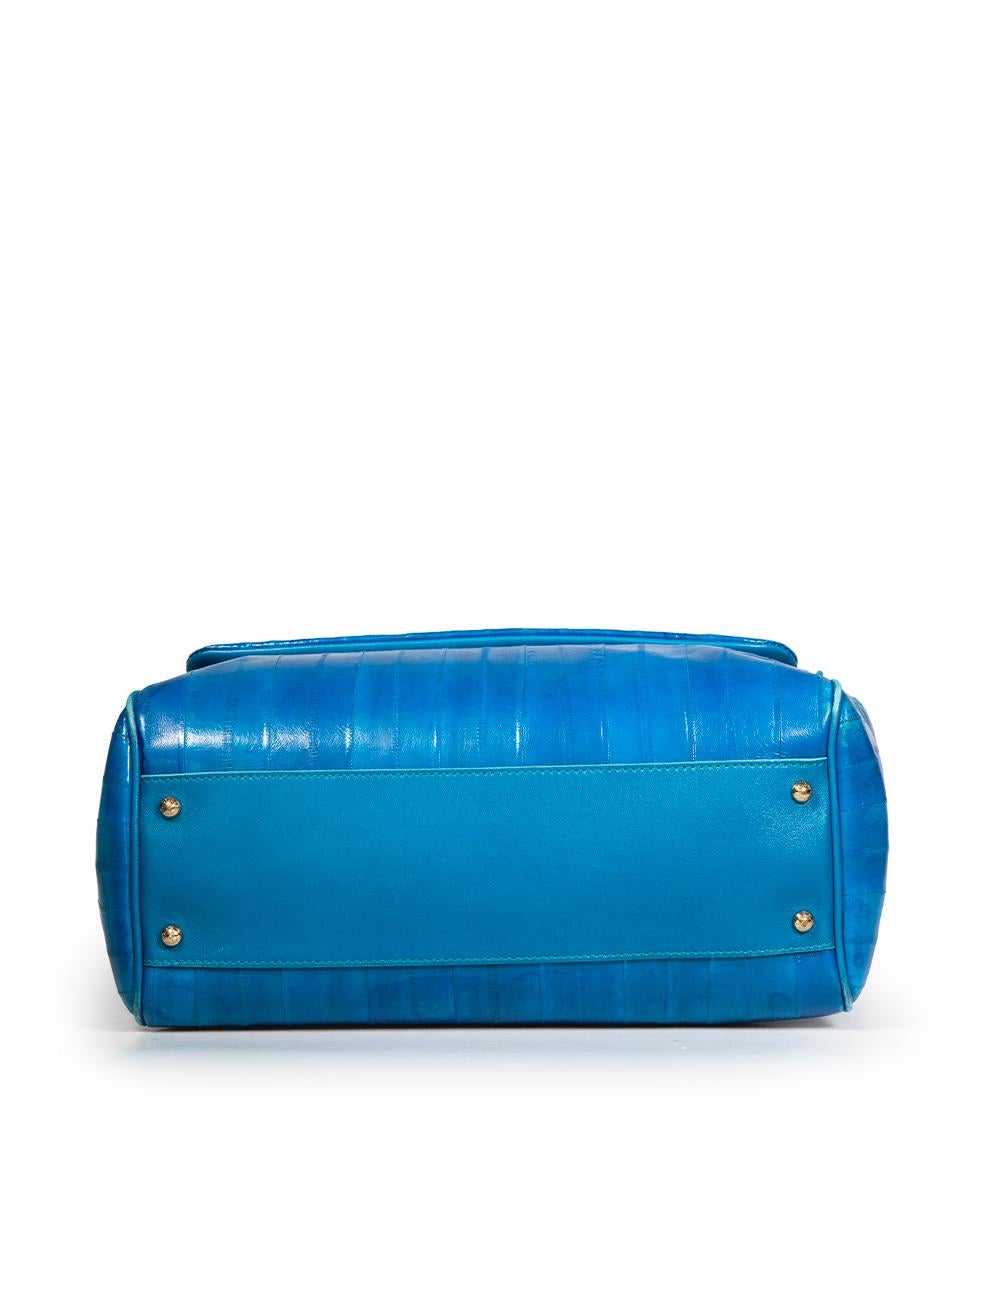 Women's Dolce & Gabbana Blue Eel Leather Miss Sicily Bag For Sale